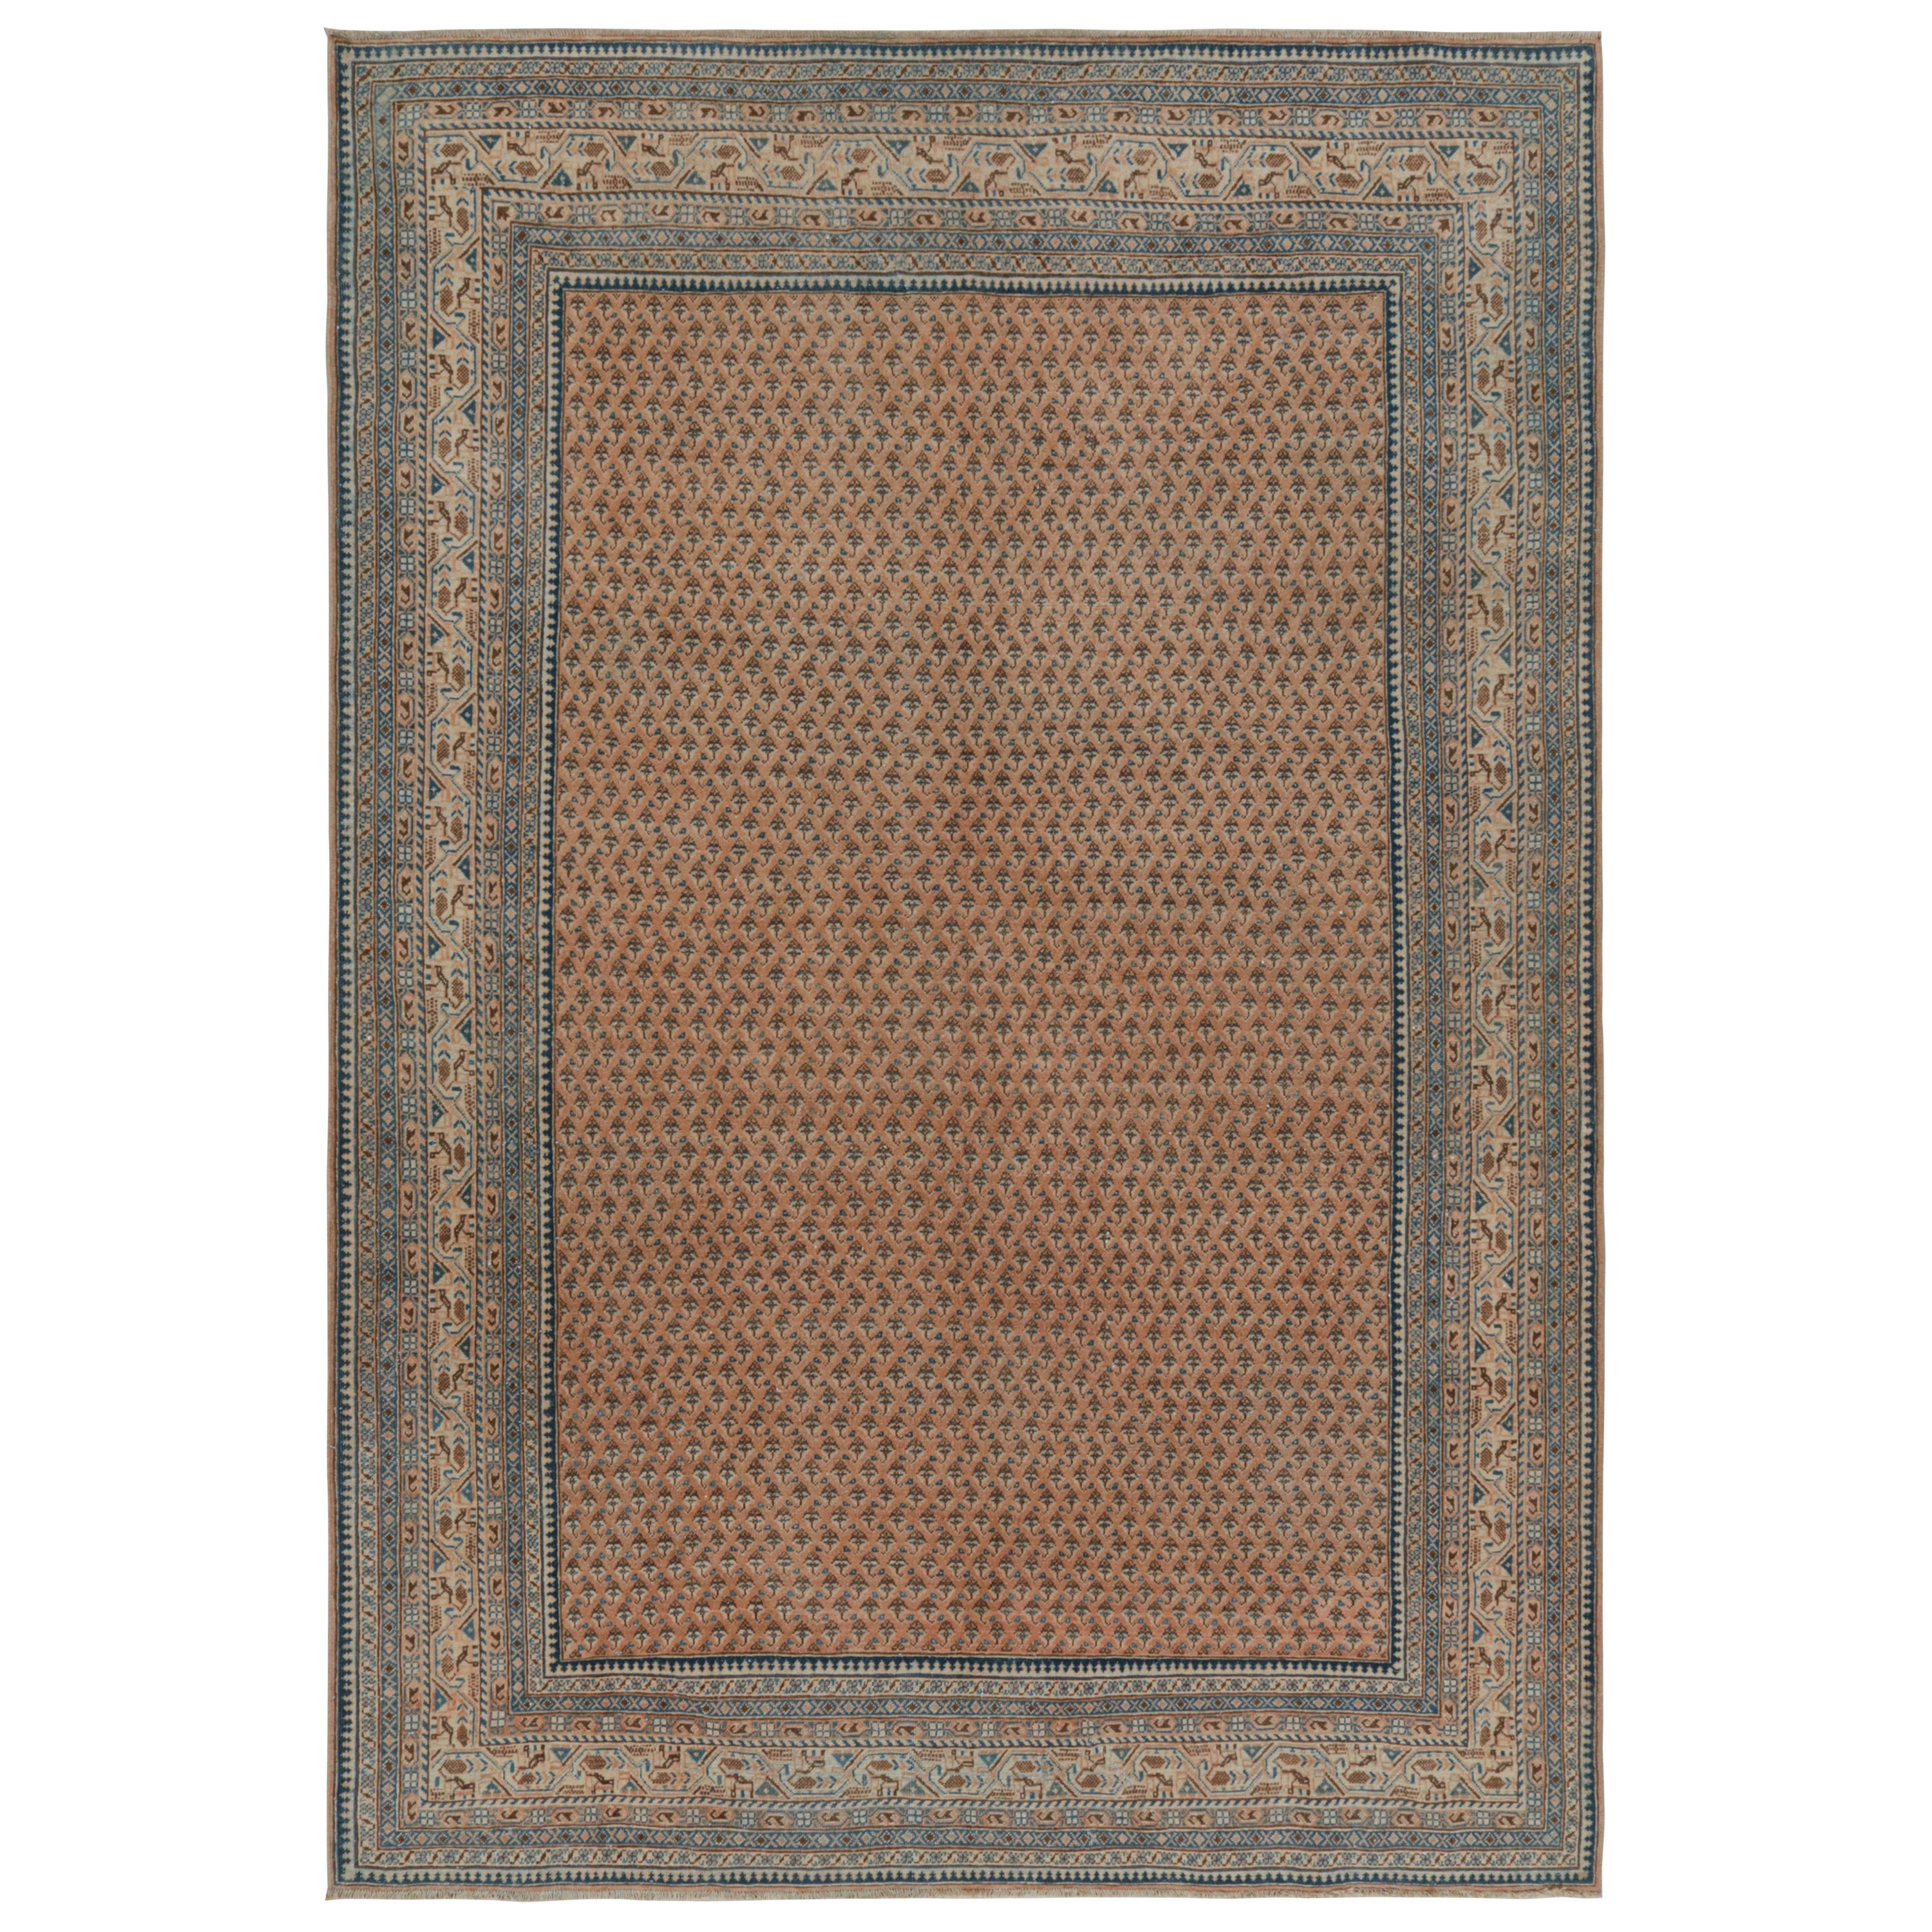 Vintage Indian rug in Beige-Brown and Blue Patterns by Rug & Kilim For Sale